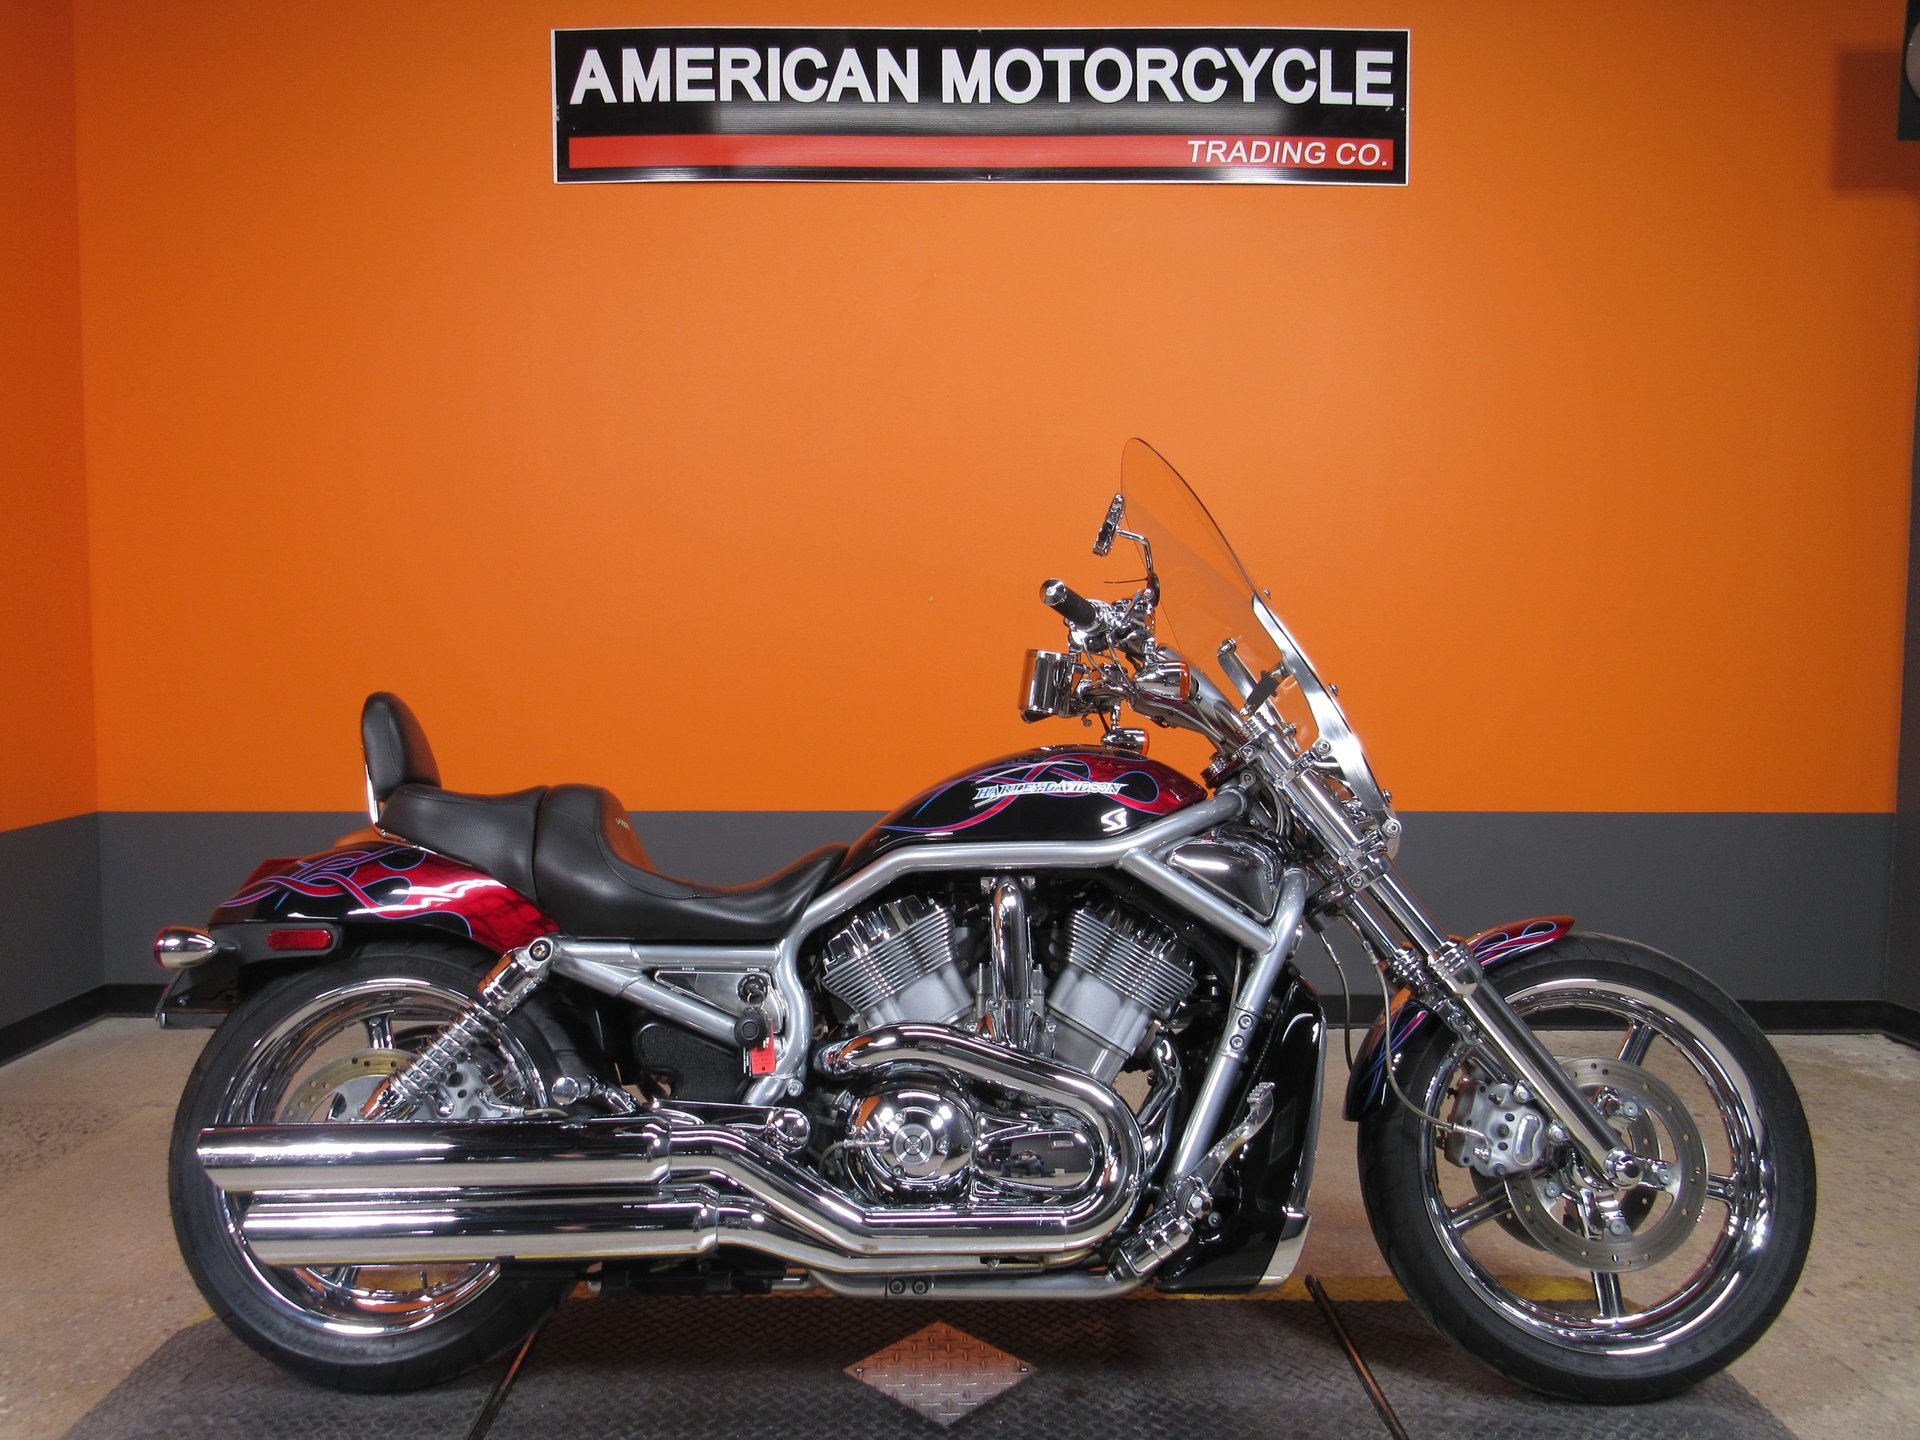 2004 Harley-Davidson V-Rod | American Motorcycle Trading Company - Used Harley  Davidson Motorcycles